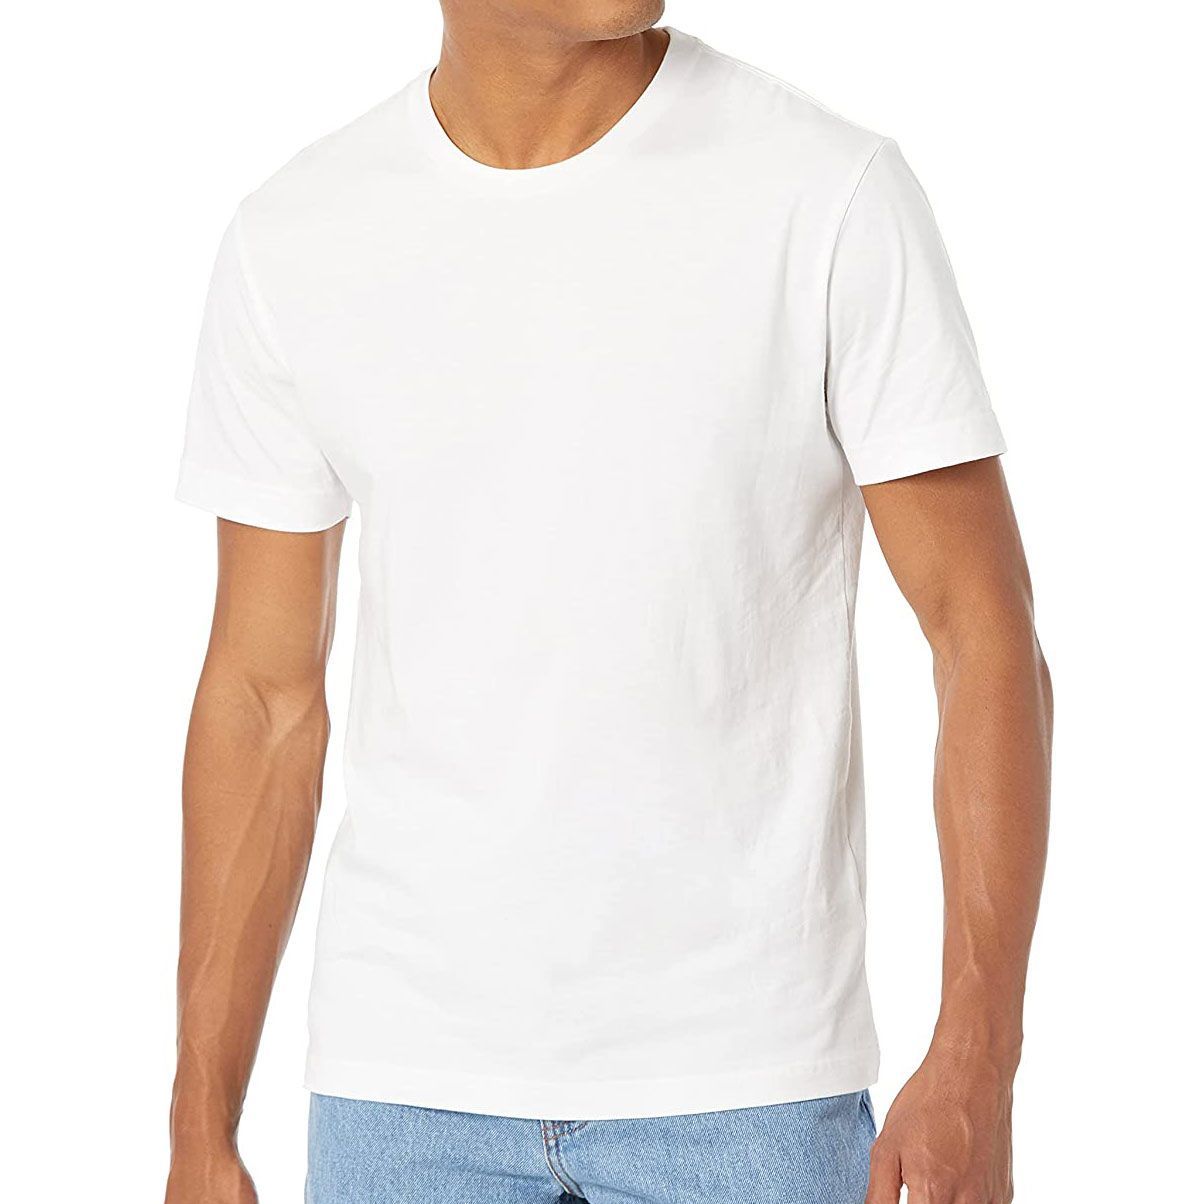 classic white t shirt